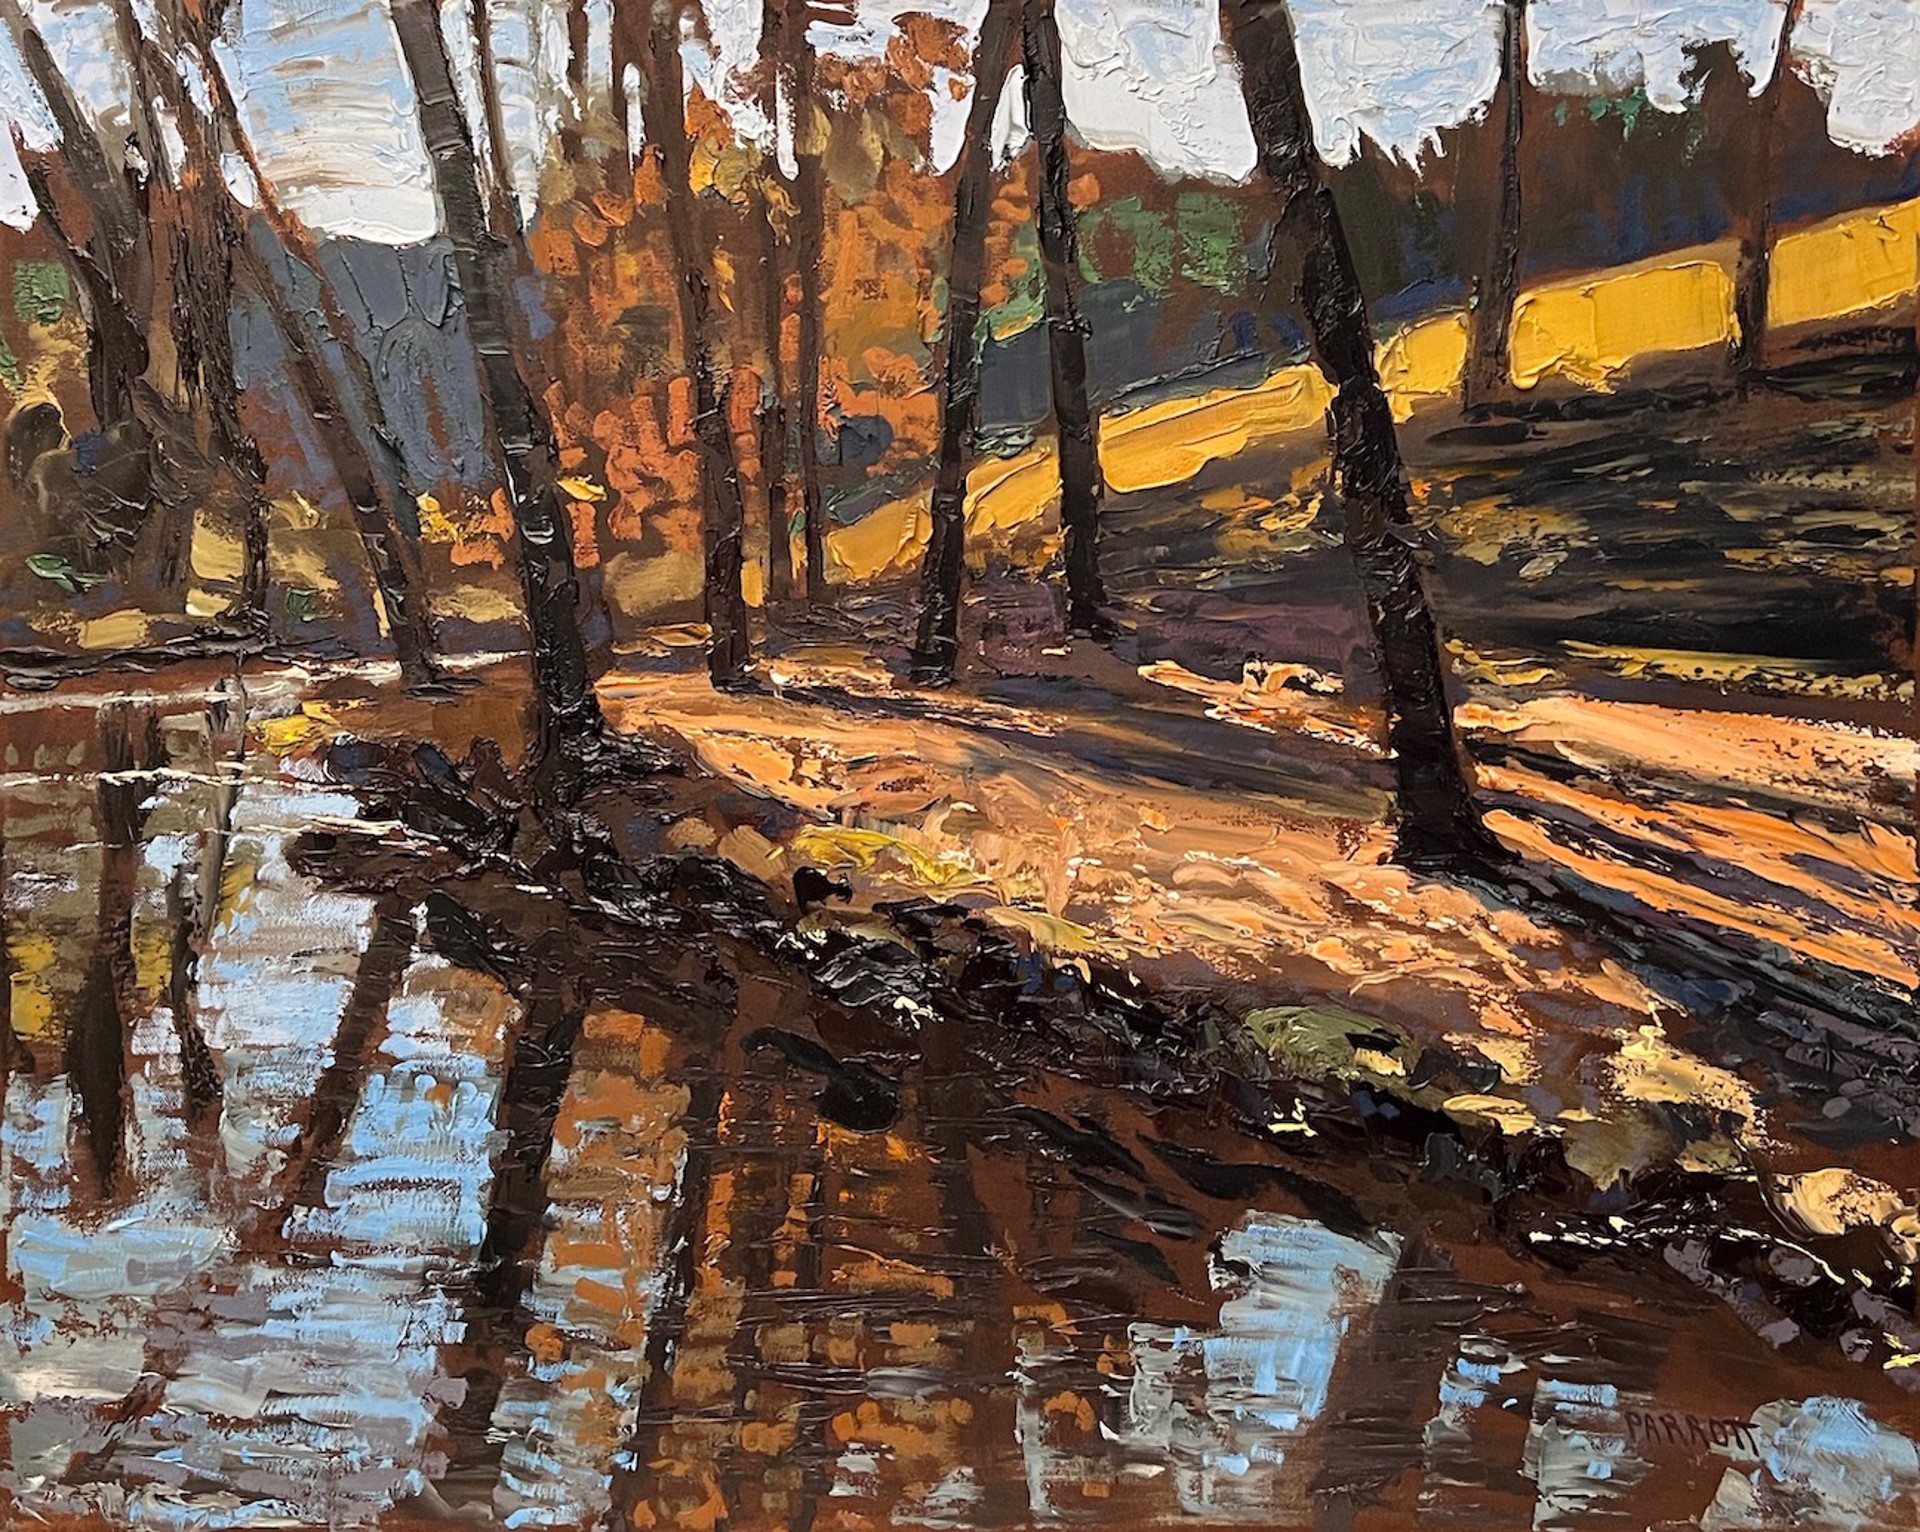 Up the Creek by Joe Parrott